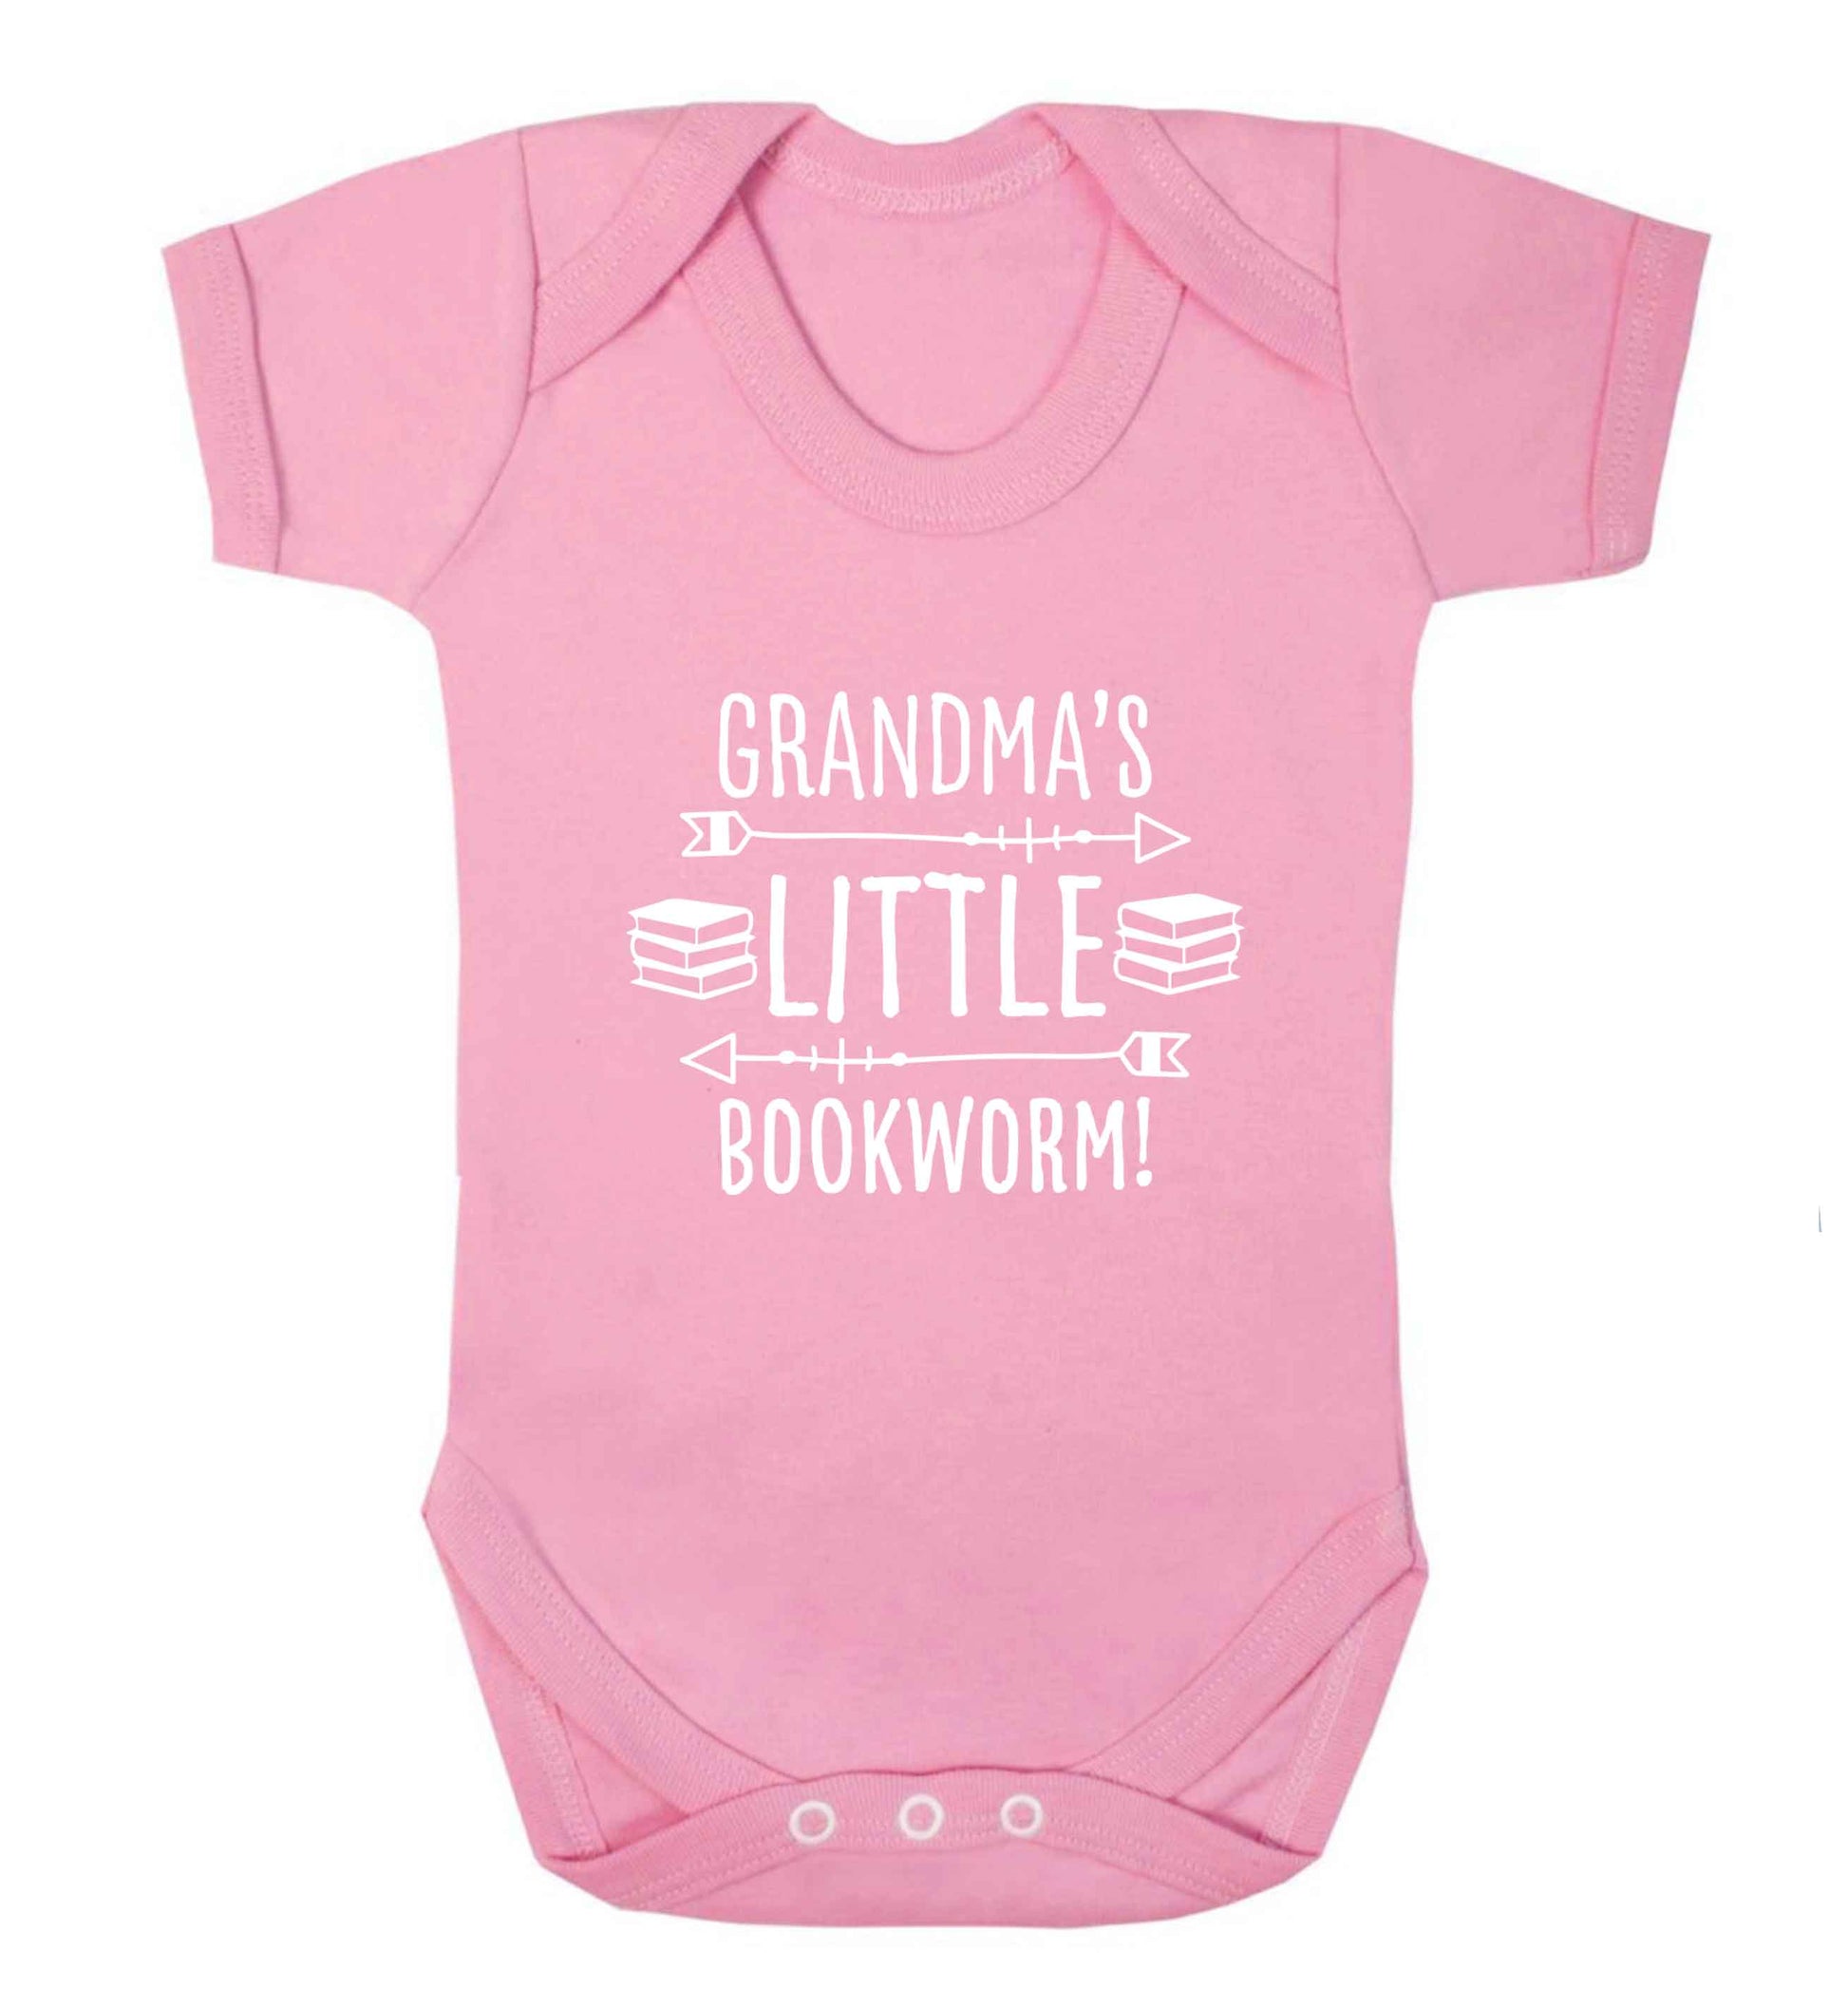 Grandma's little bookworm baby vest pale pink 18-24 months